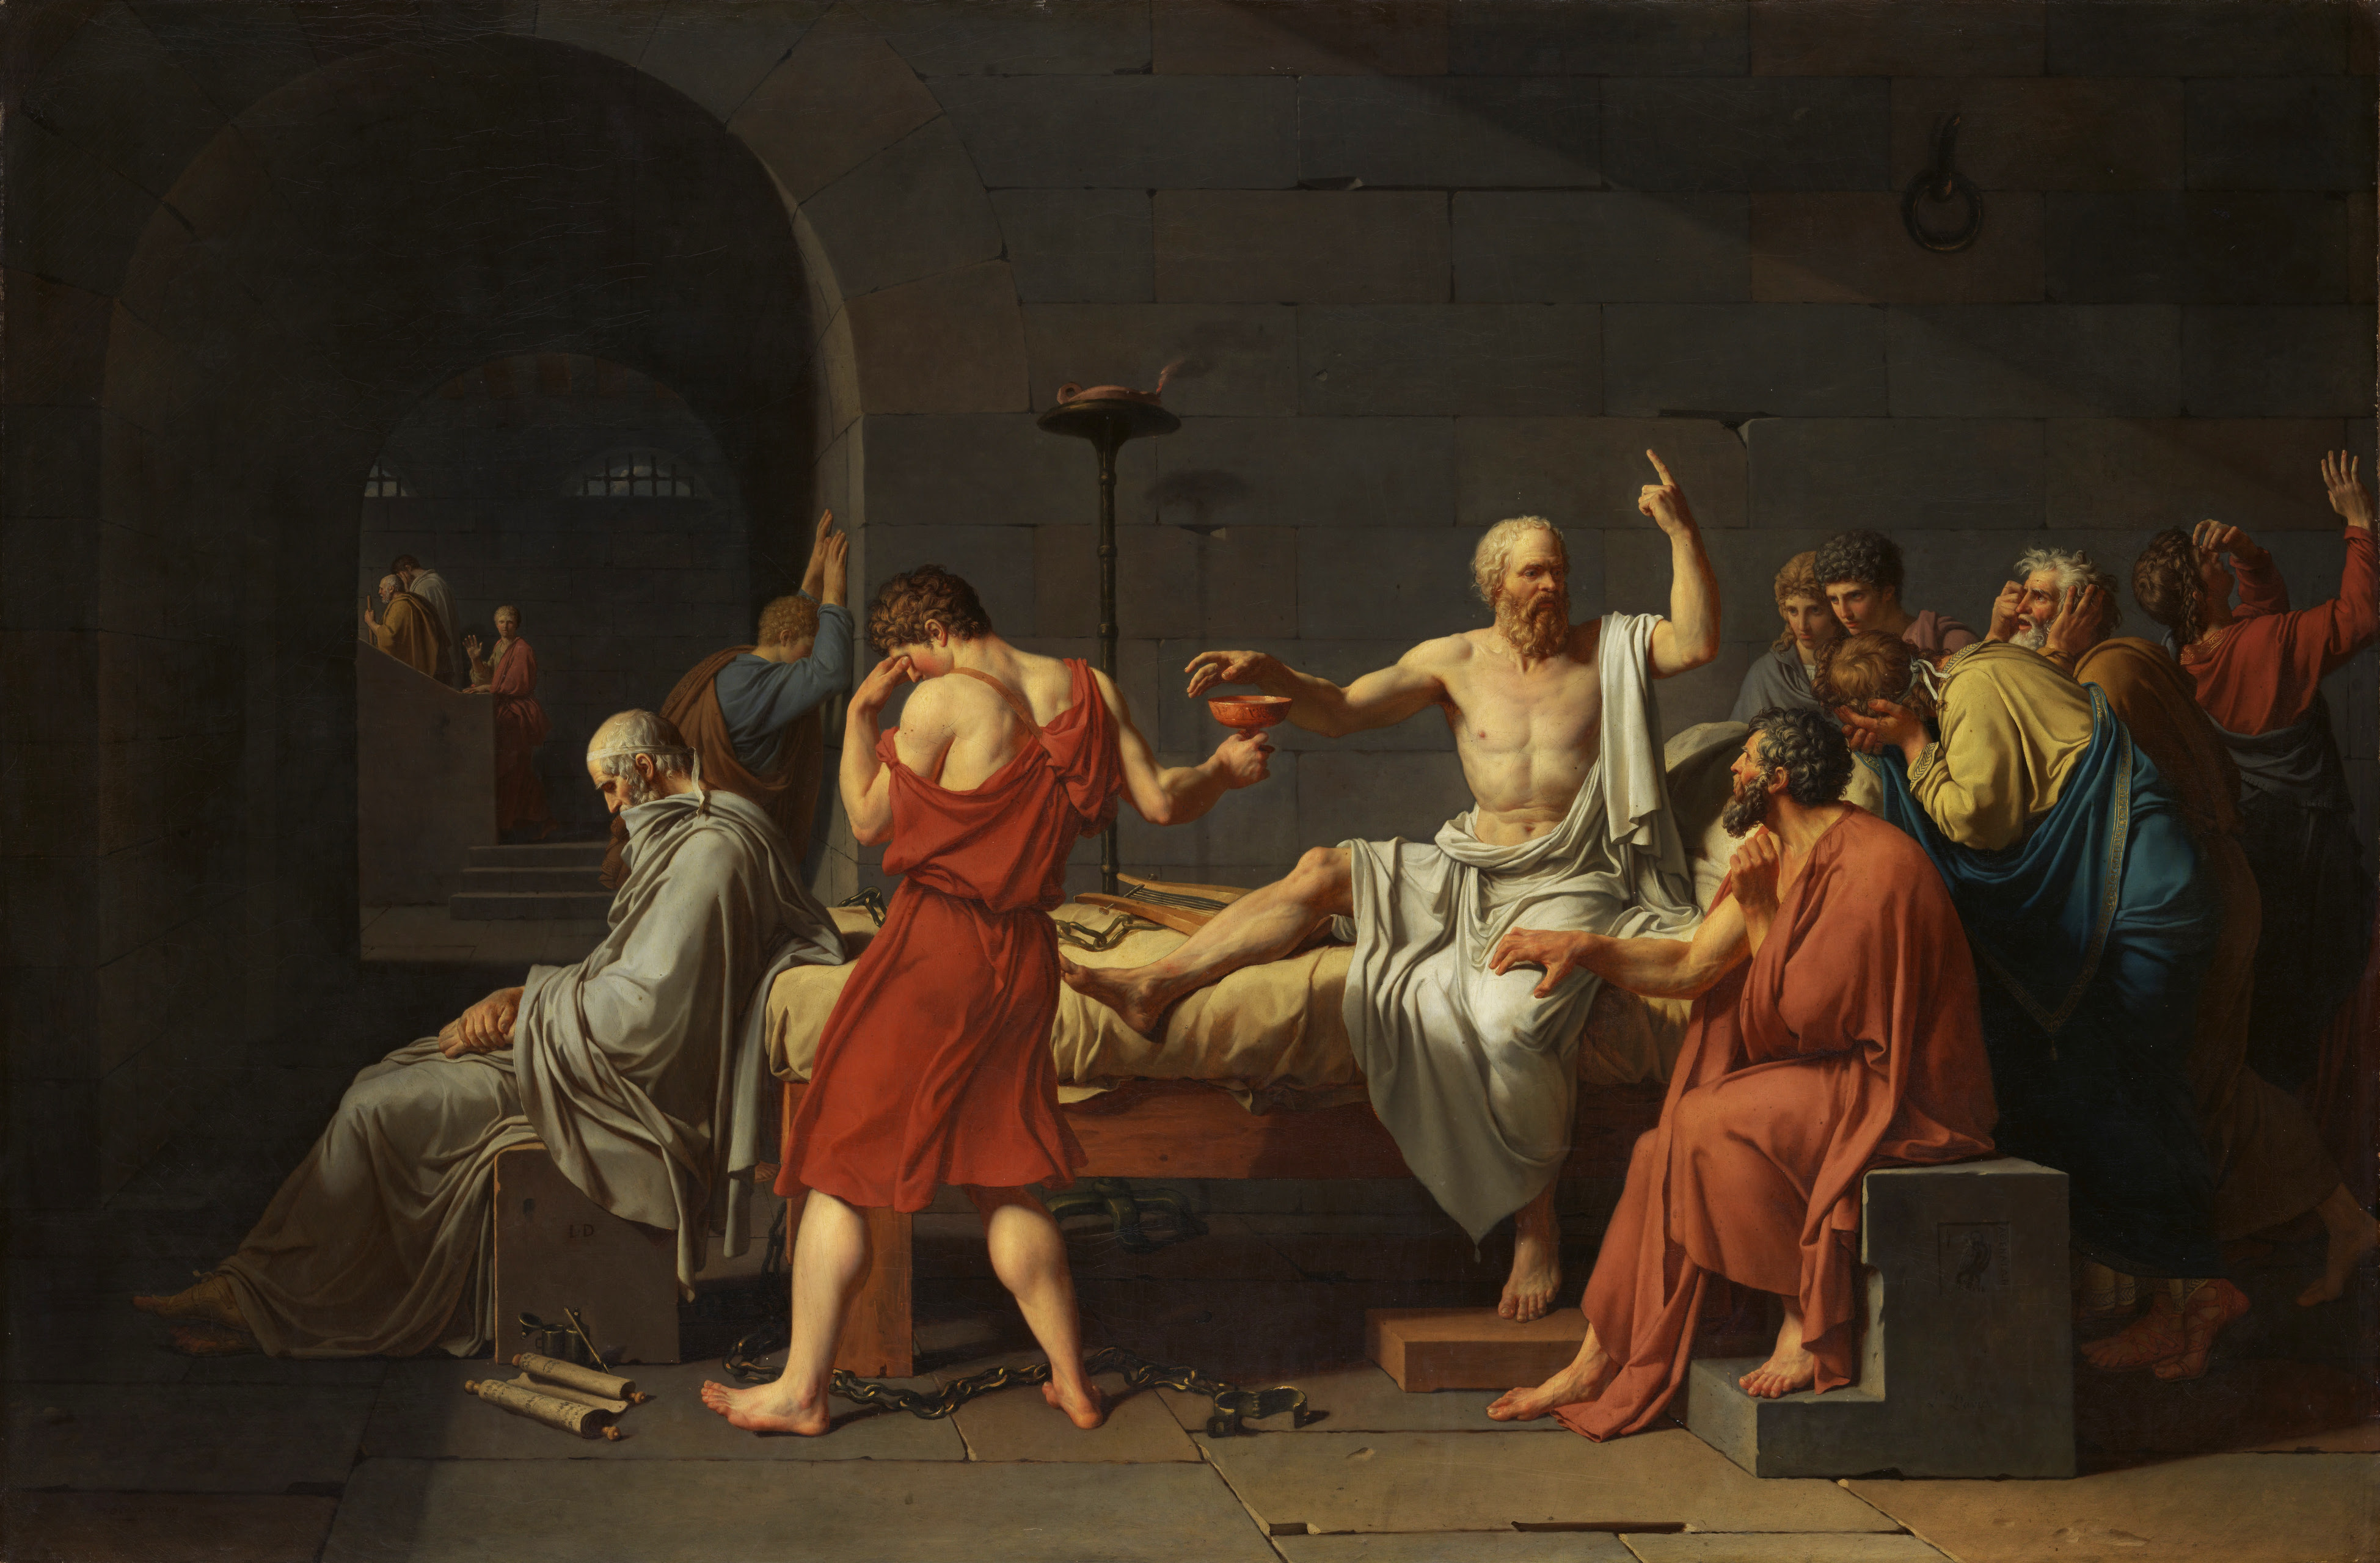 http://upload.wikimedia.org/wikipedia/commons/8/8c/David_-_The_Death_of_Socrates.jpg